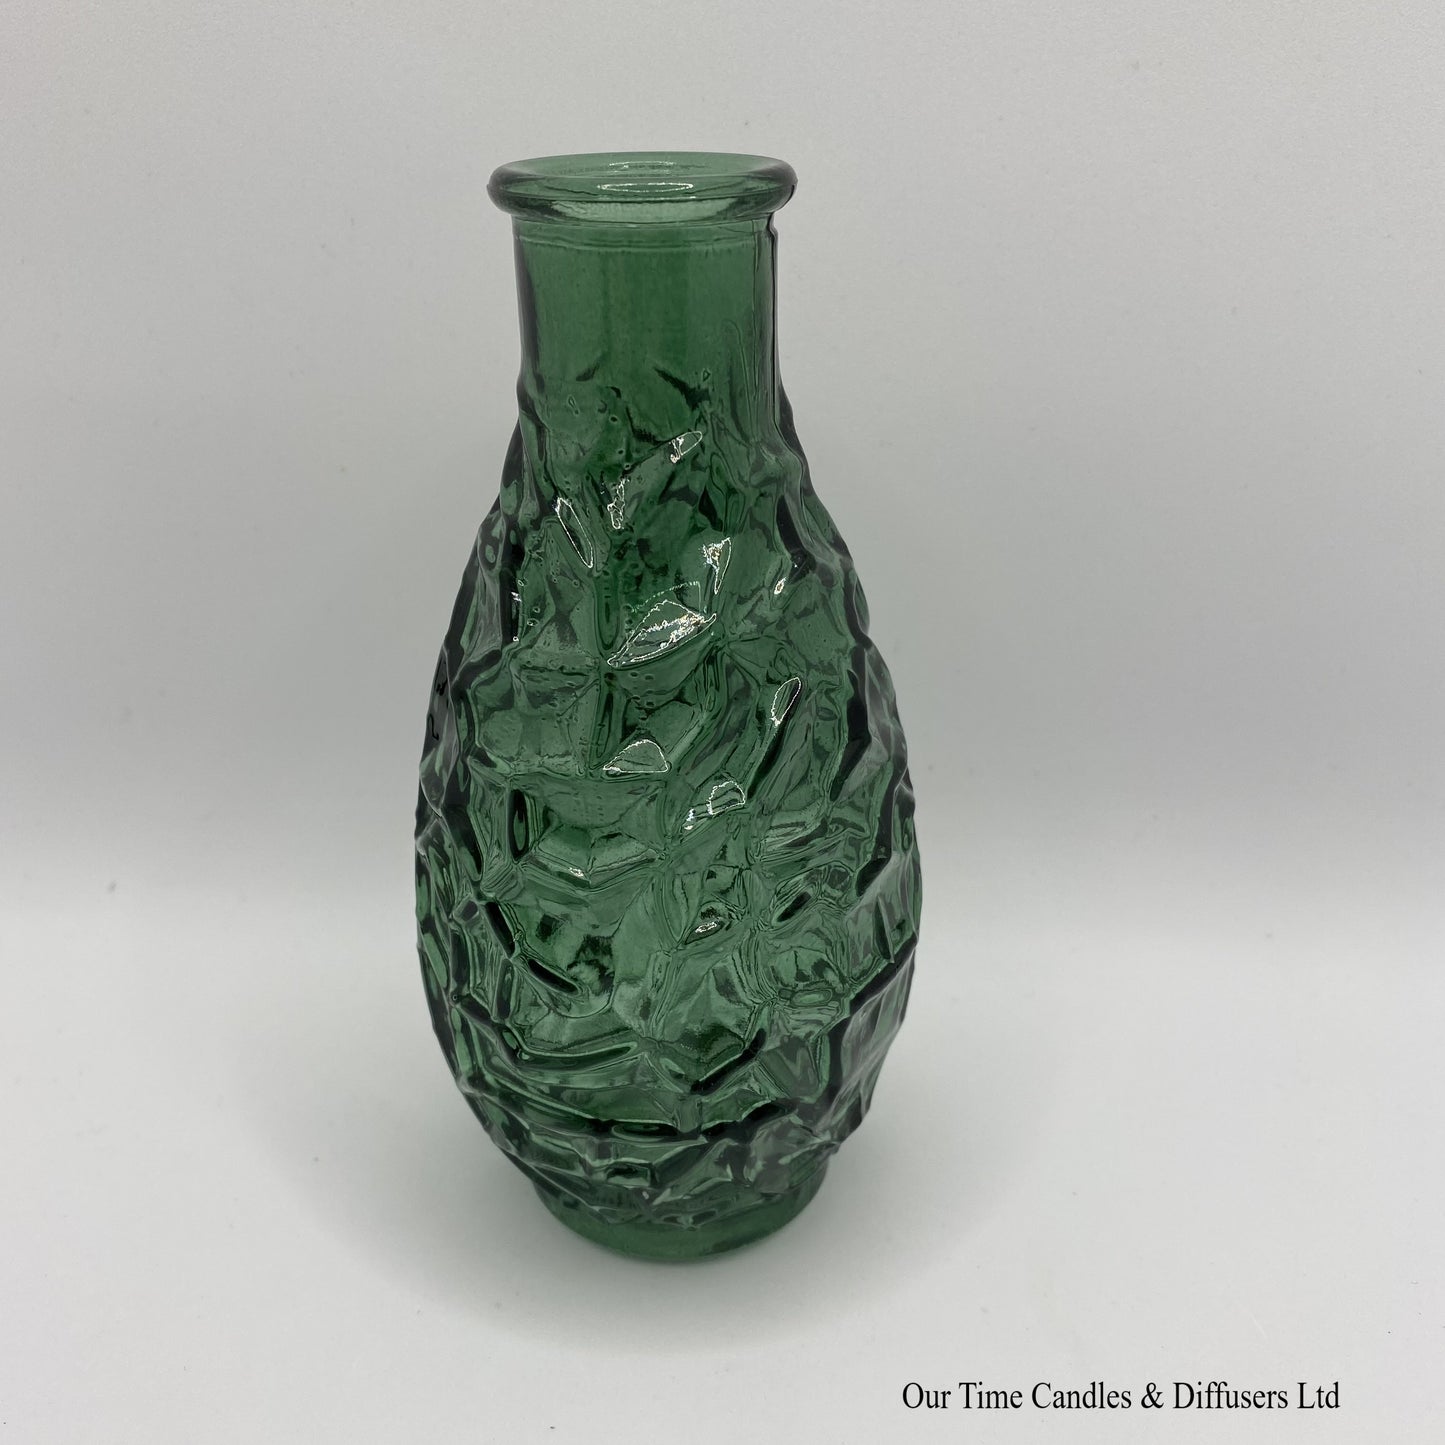 Decorative diffuser vase in green